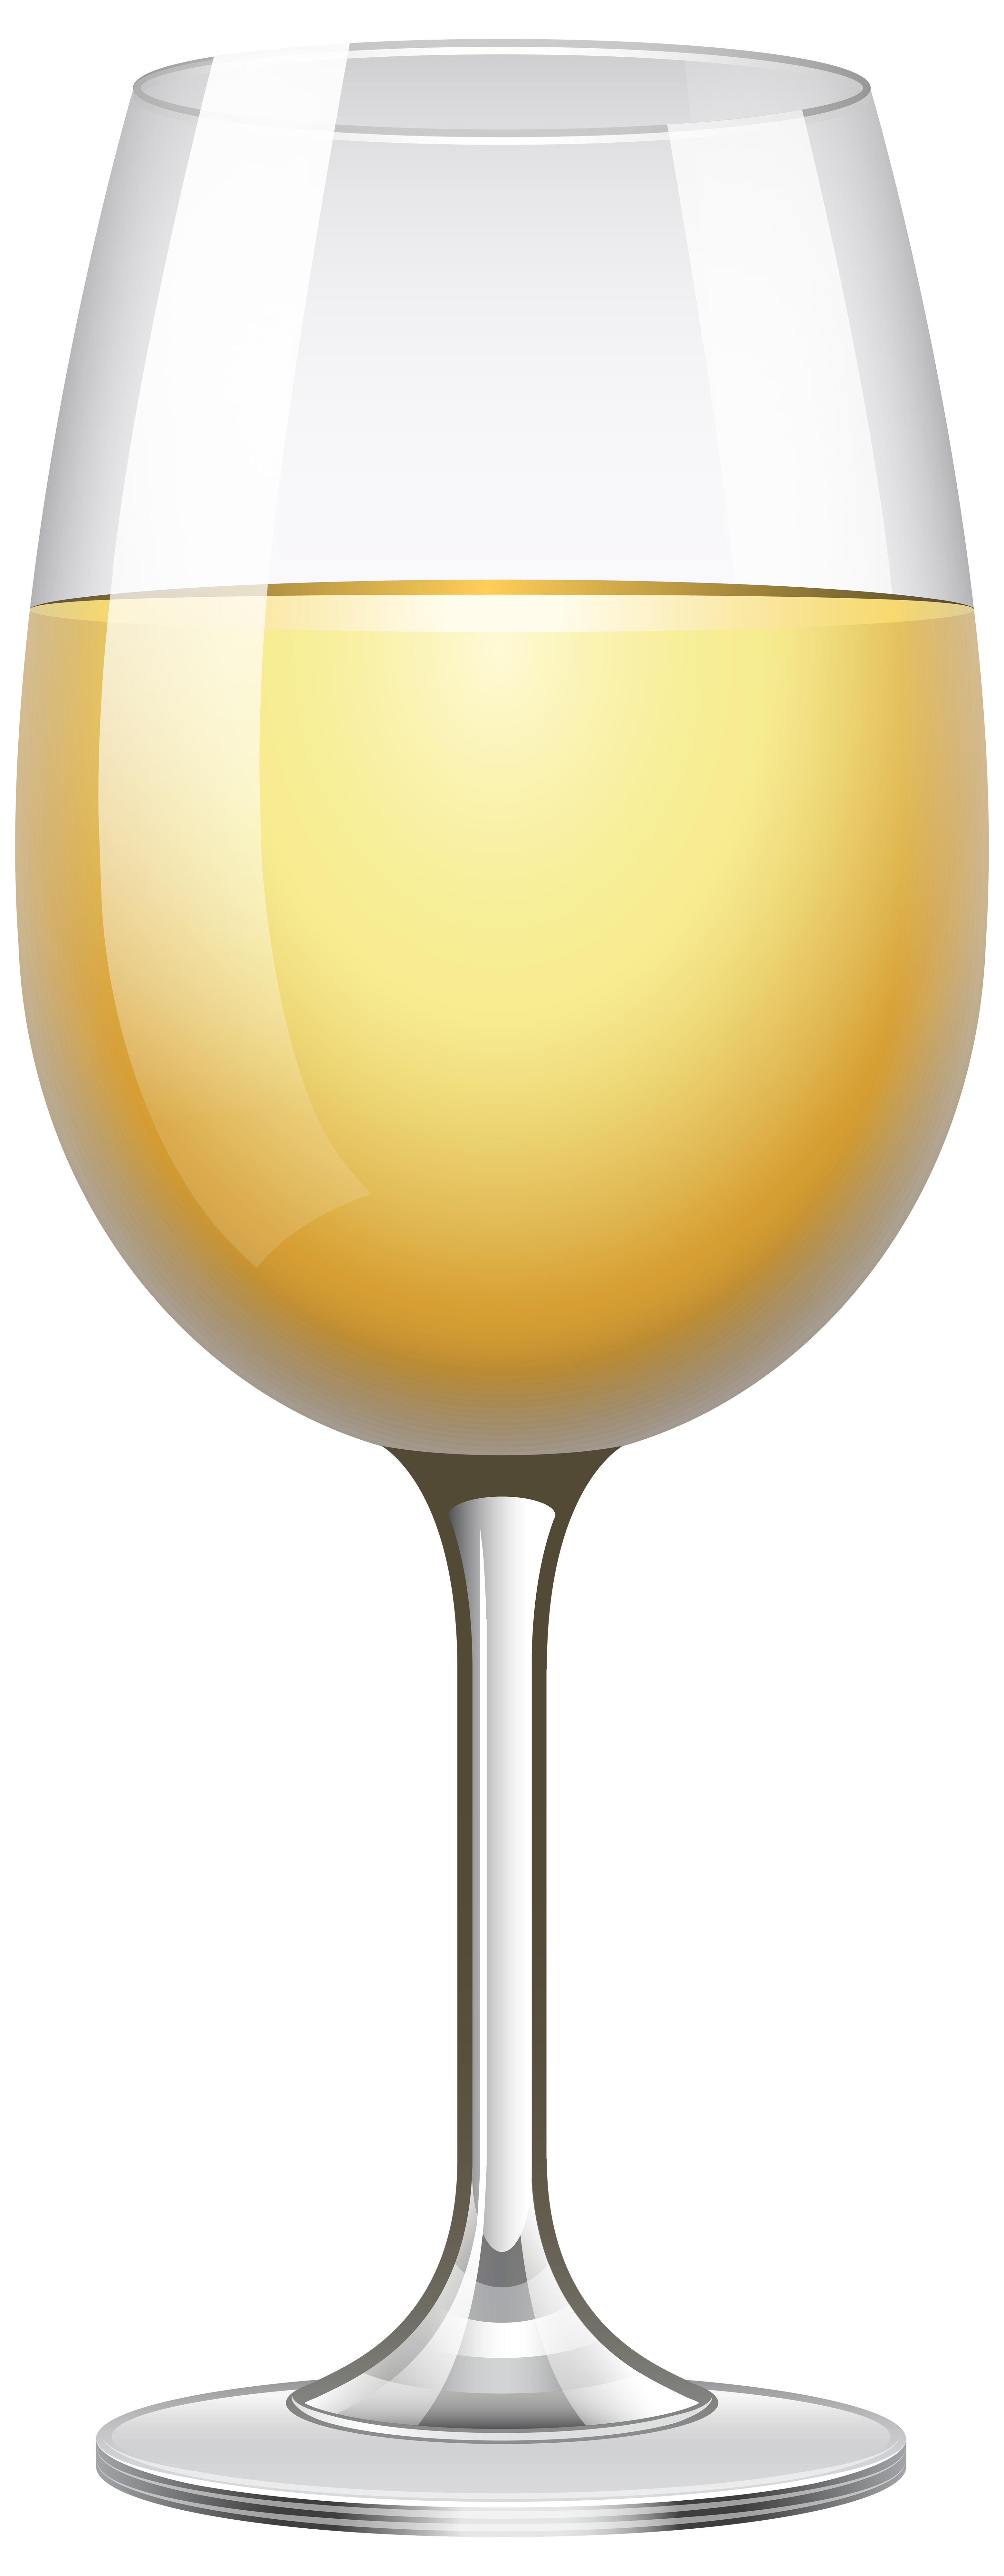 clipart wine glasses - photo #20